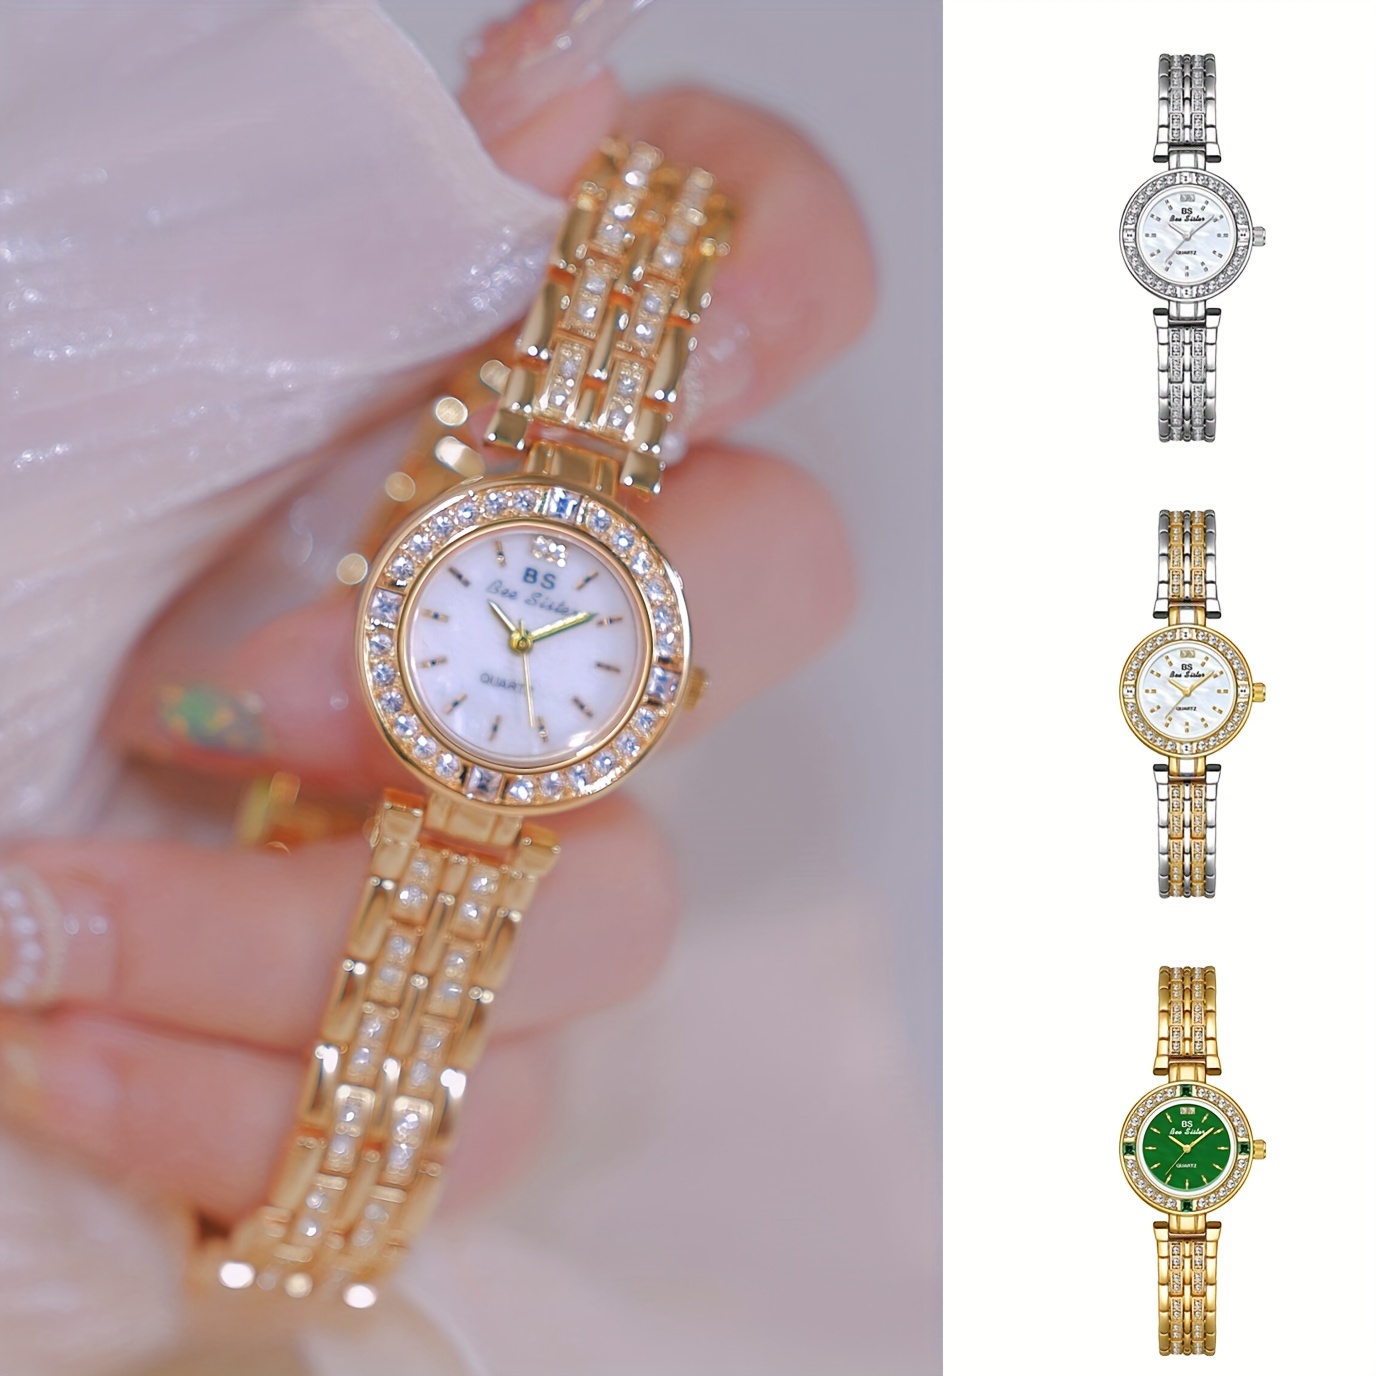 Mode 5pcs Set Frauen Uhren Luxus Magnet Schnalle Blume Strass Uhr Damen  Armband Armband Set